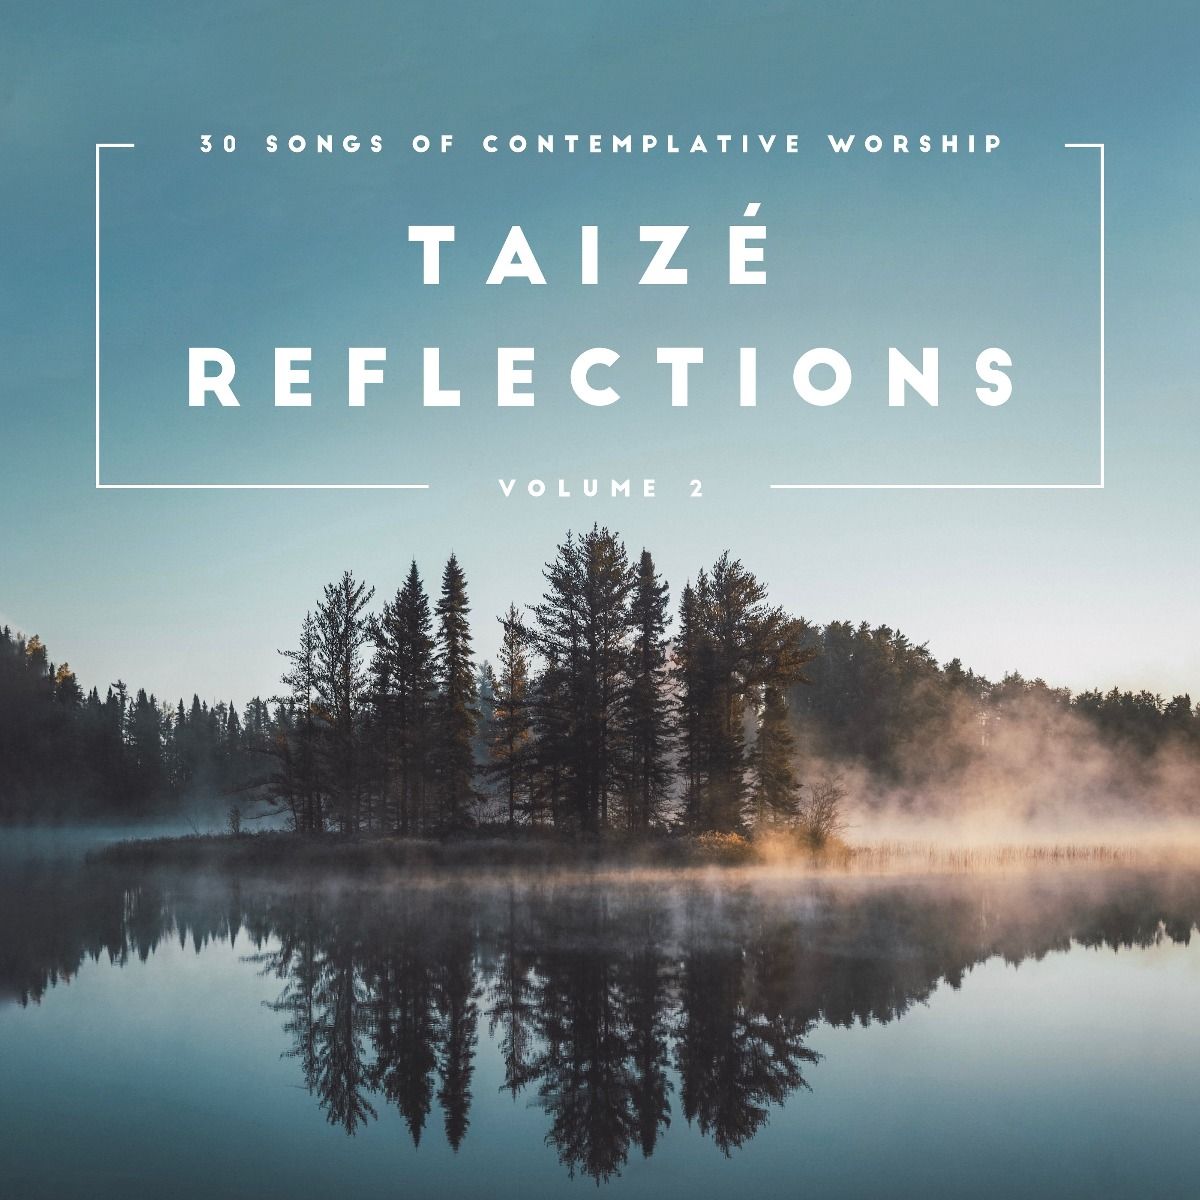 Taize reflections (Vol. 2)